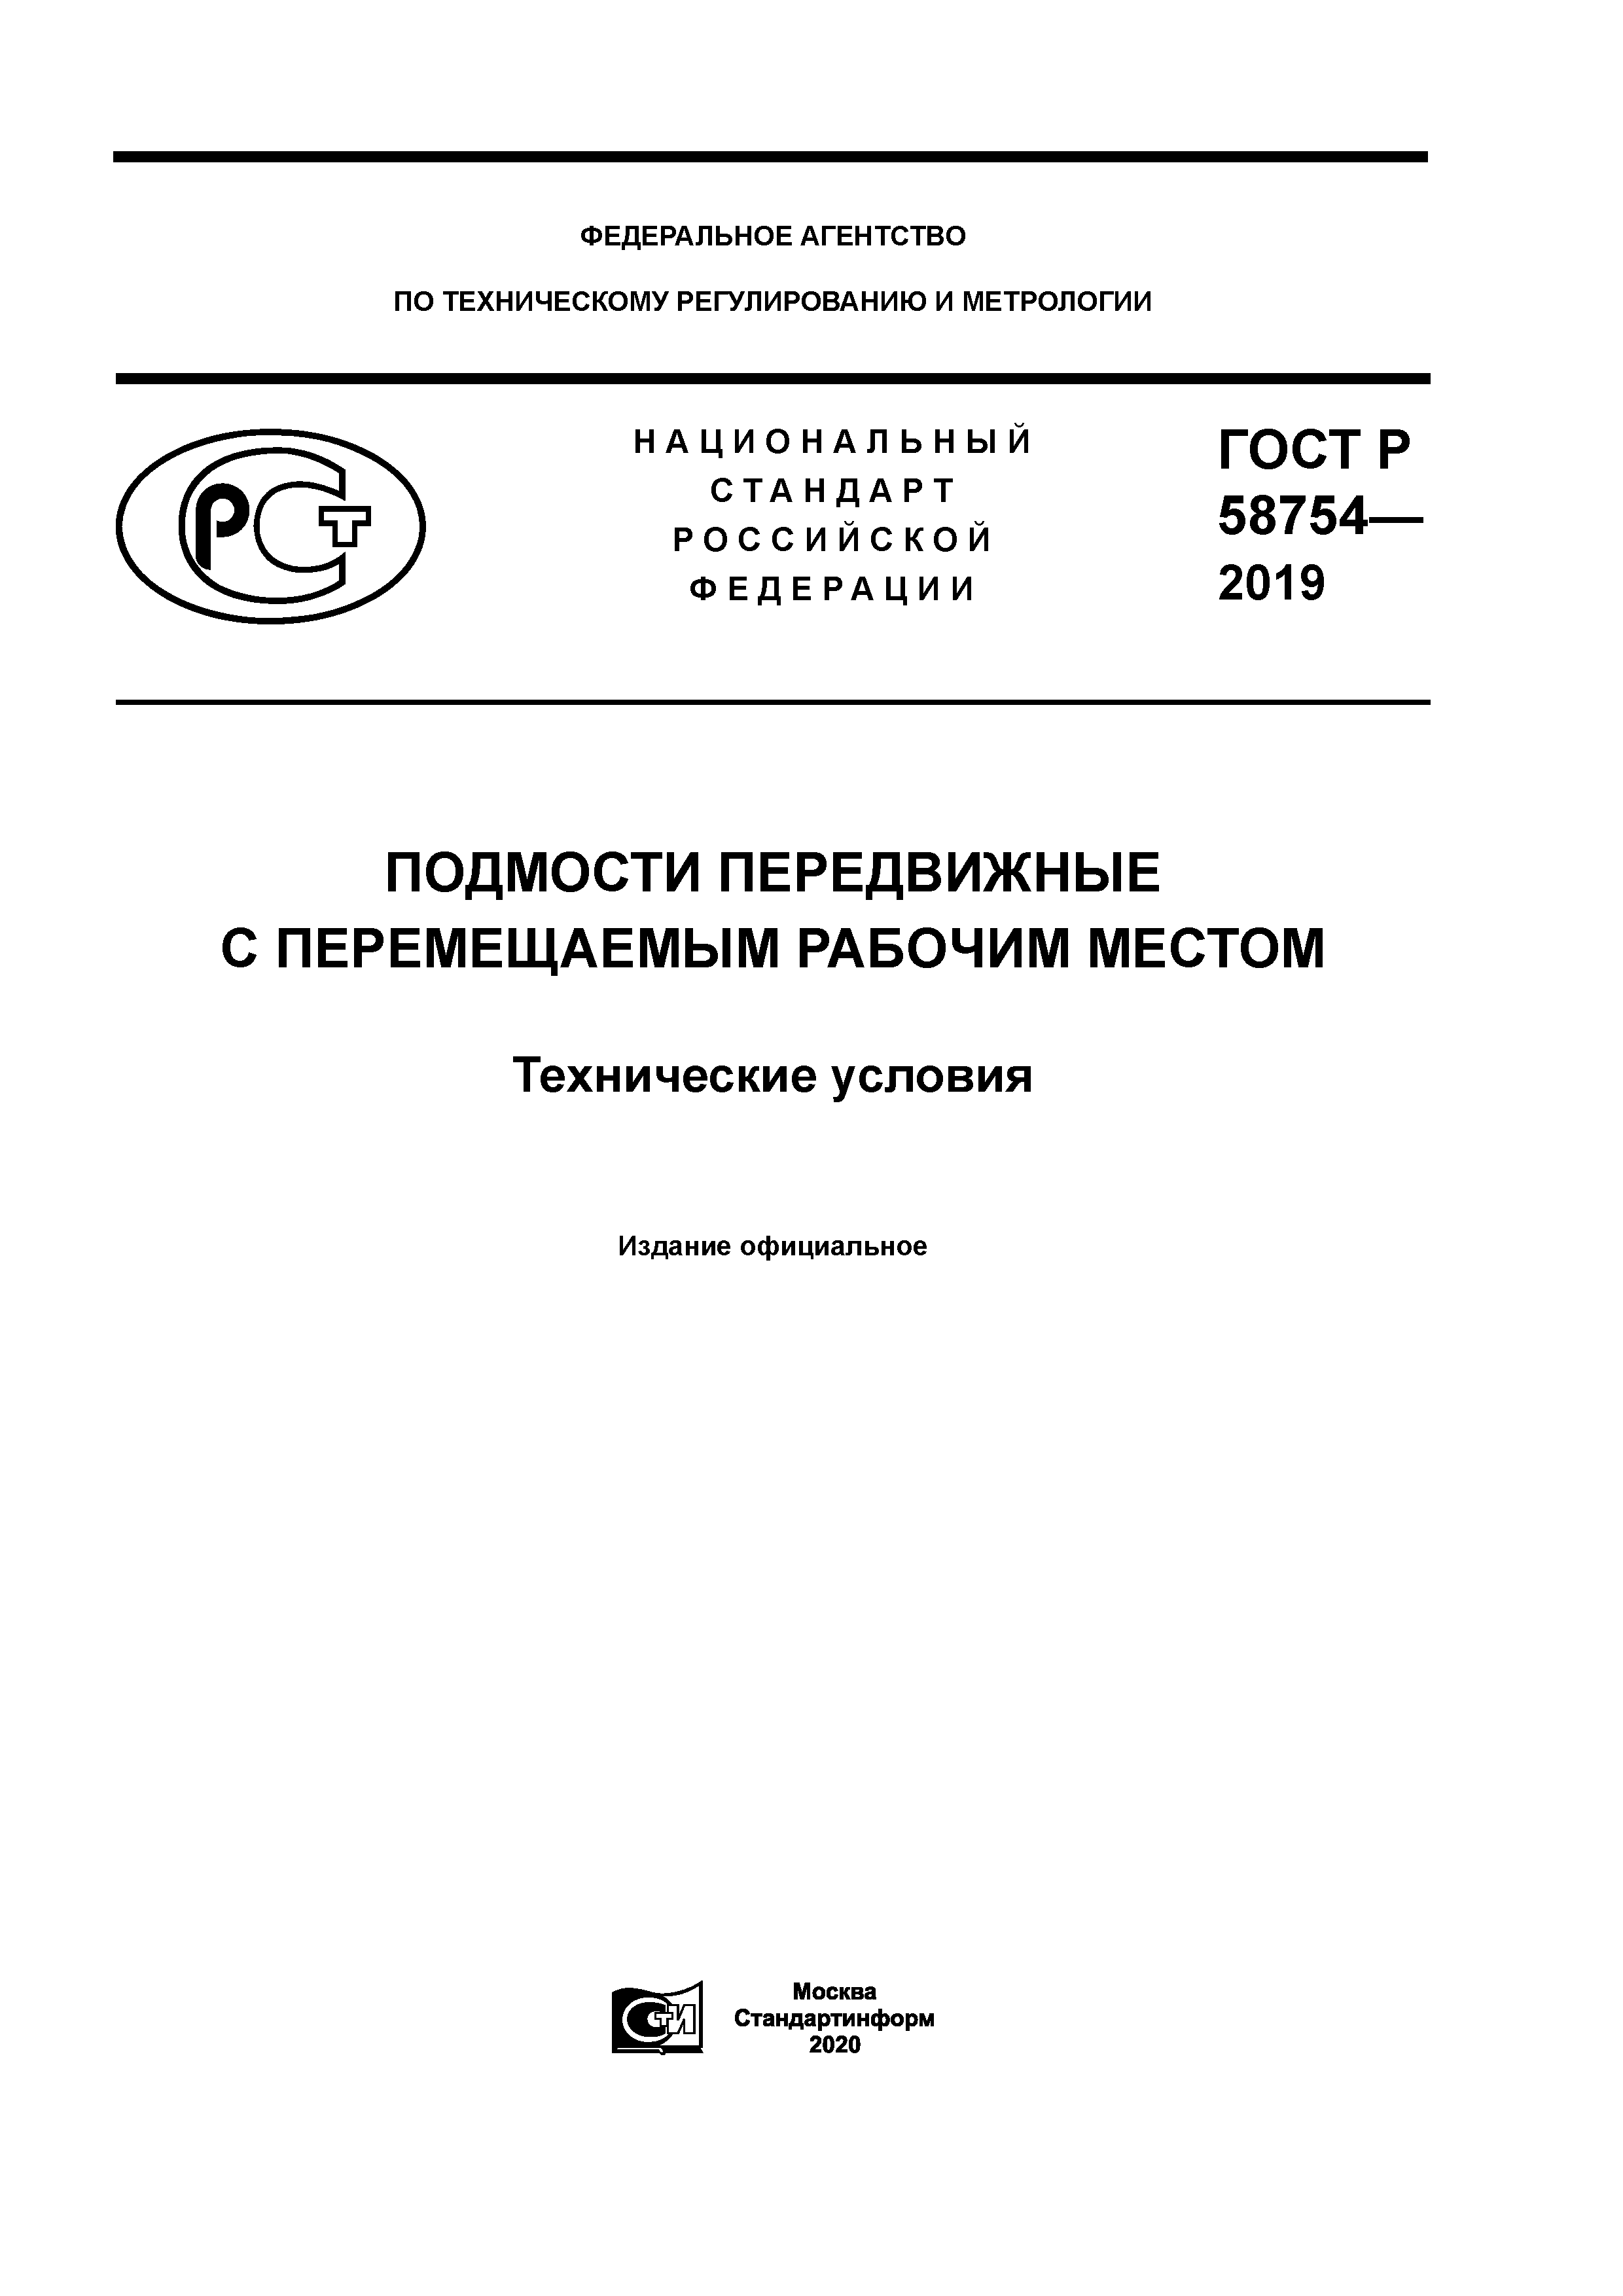 ГОСТ Р 58754-2019